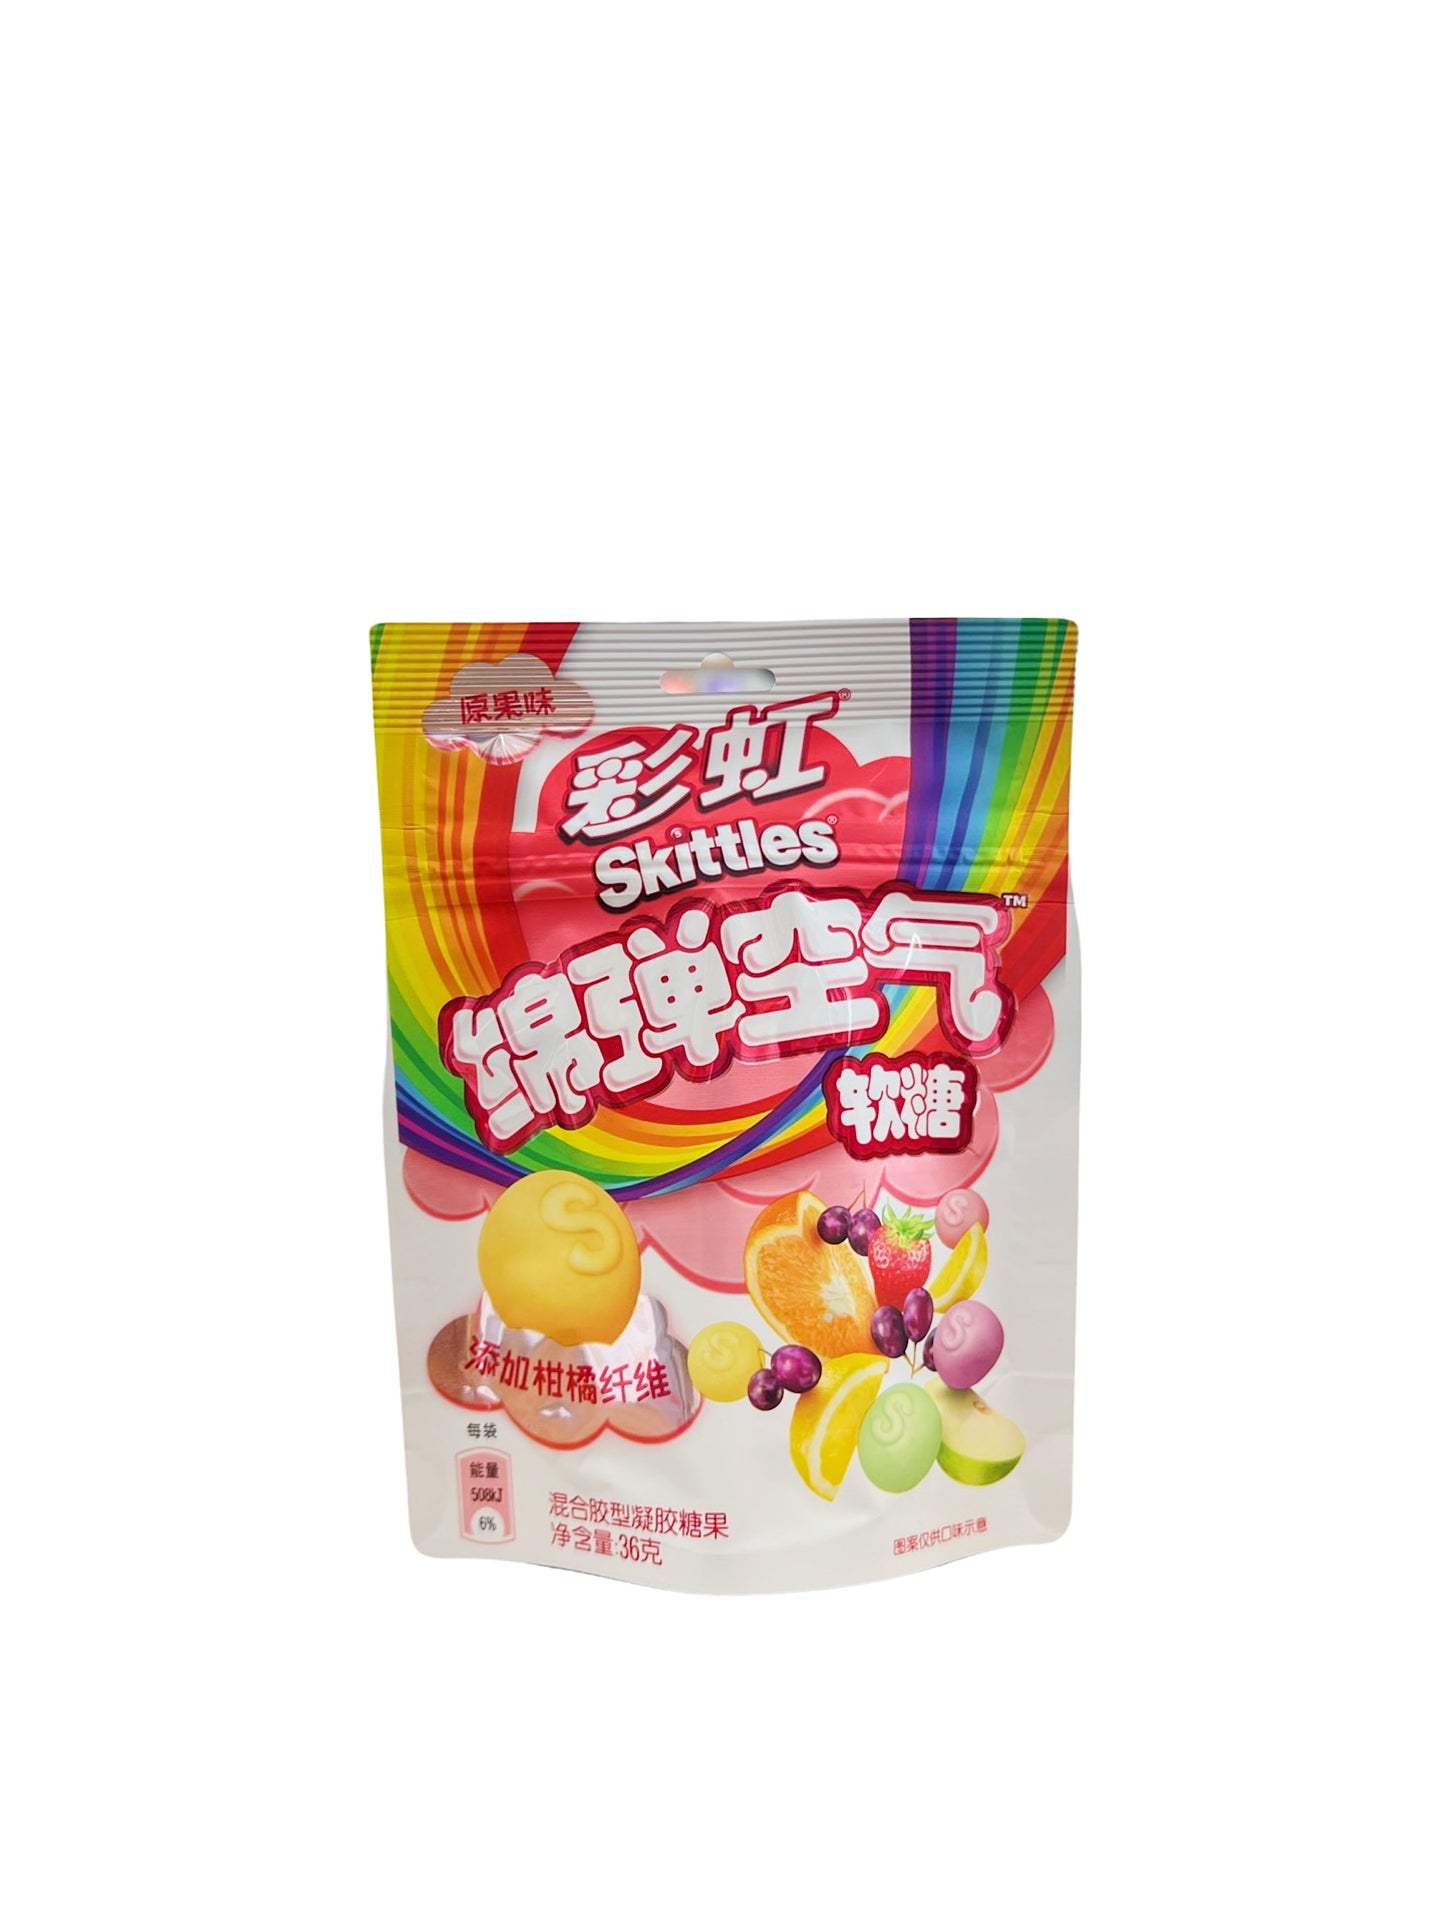 Skittles Gummies - Original Mixed Fruit